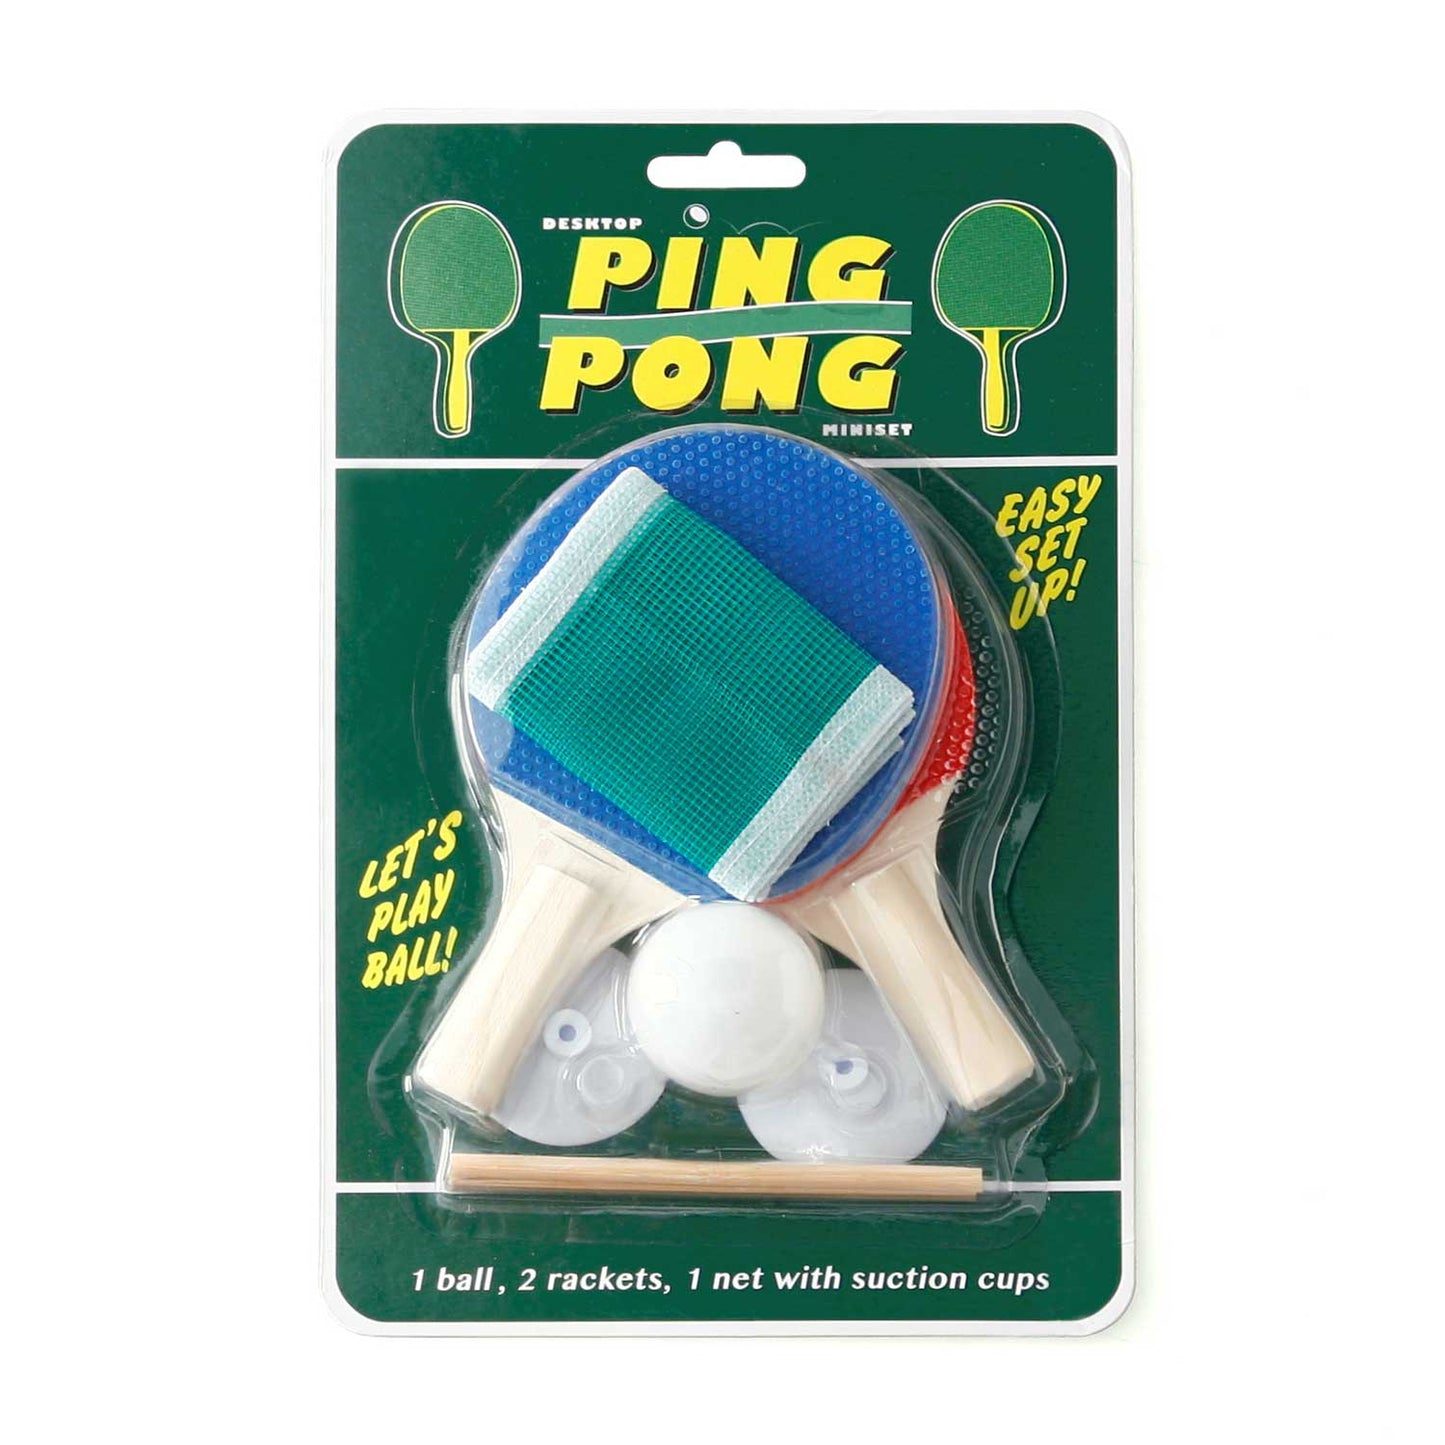 Mini Ping-Pong Set